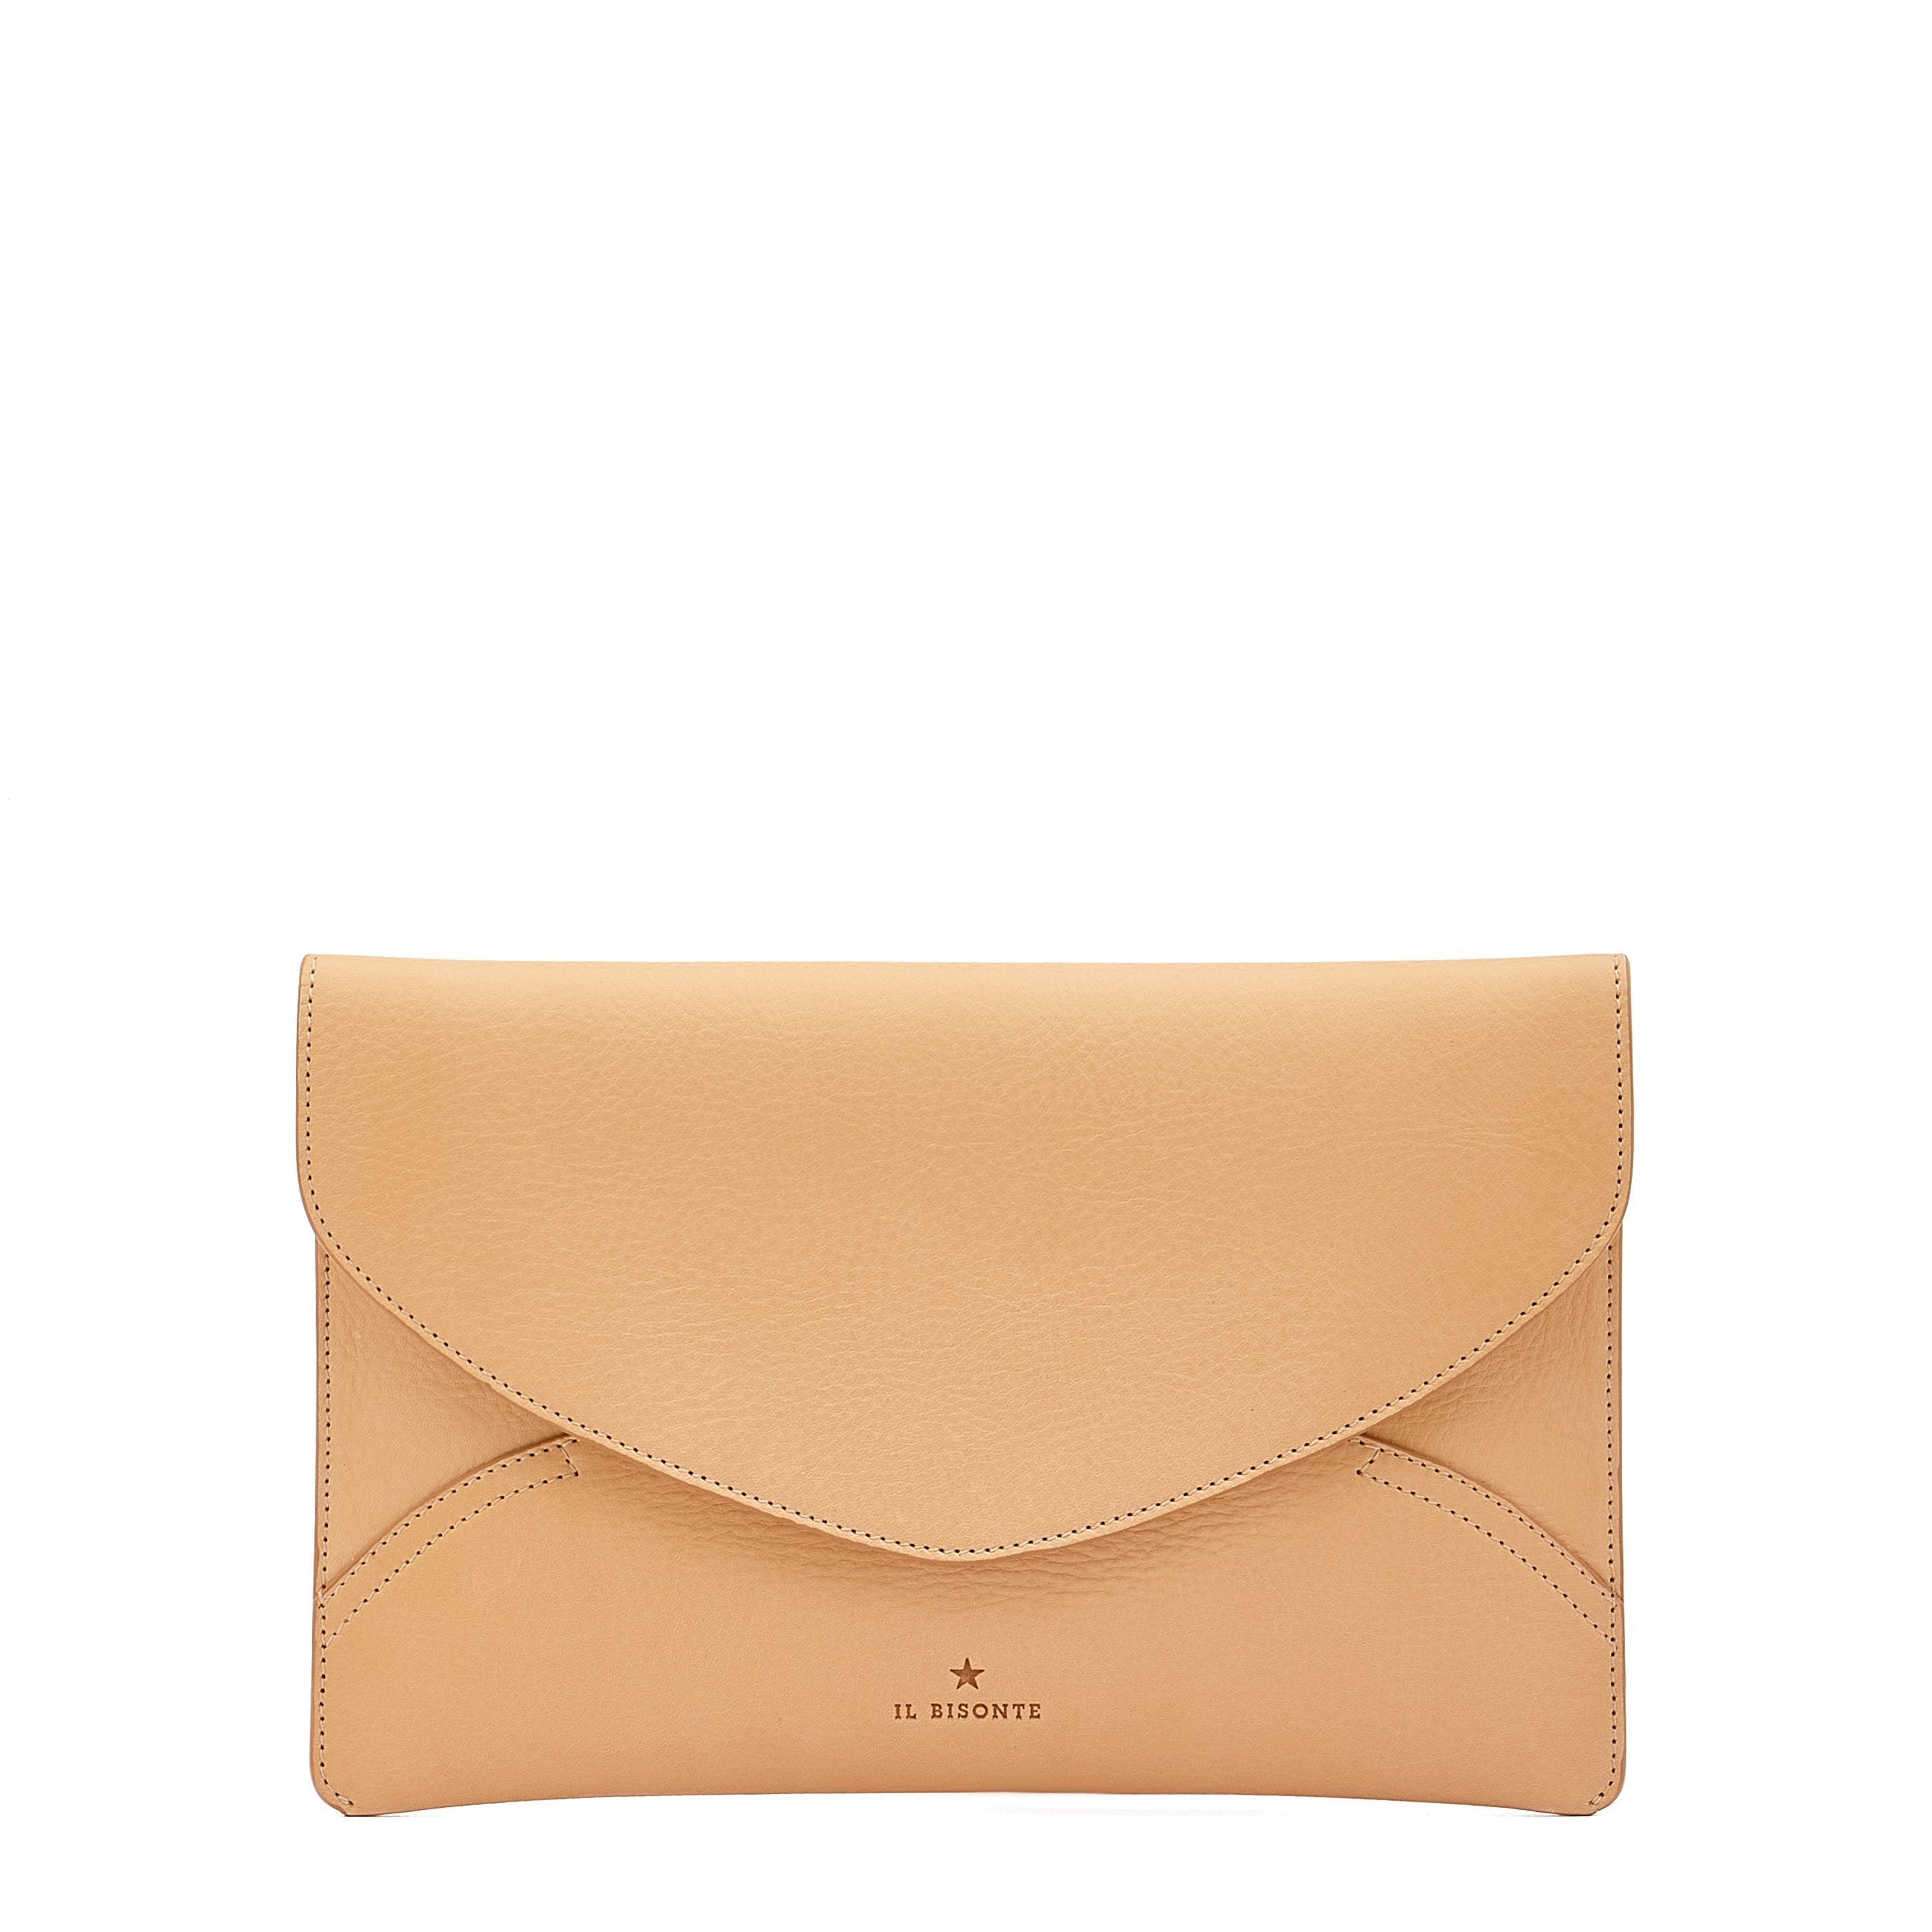 Esperia | Women's clutch bag in leather color natural